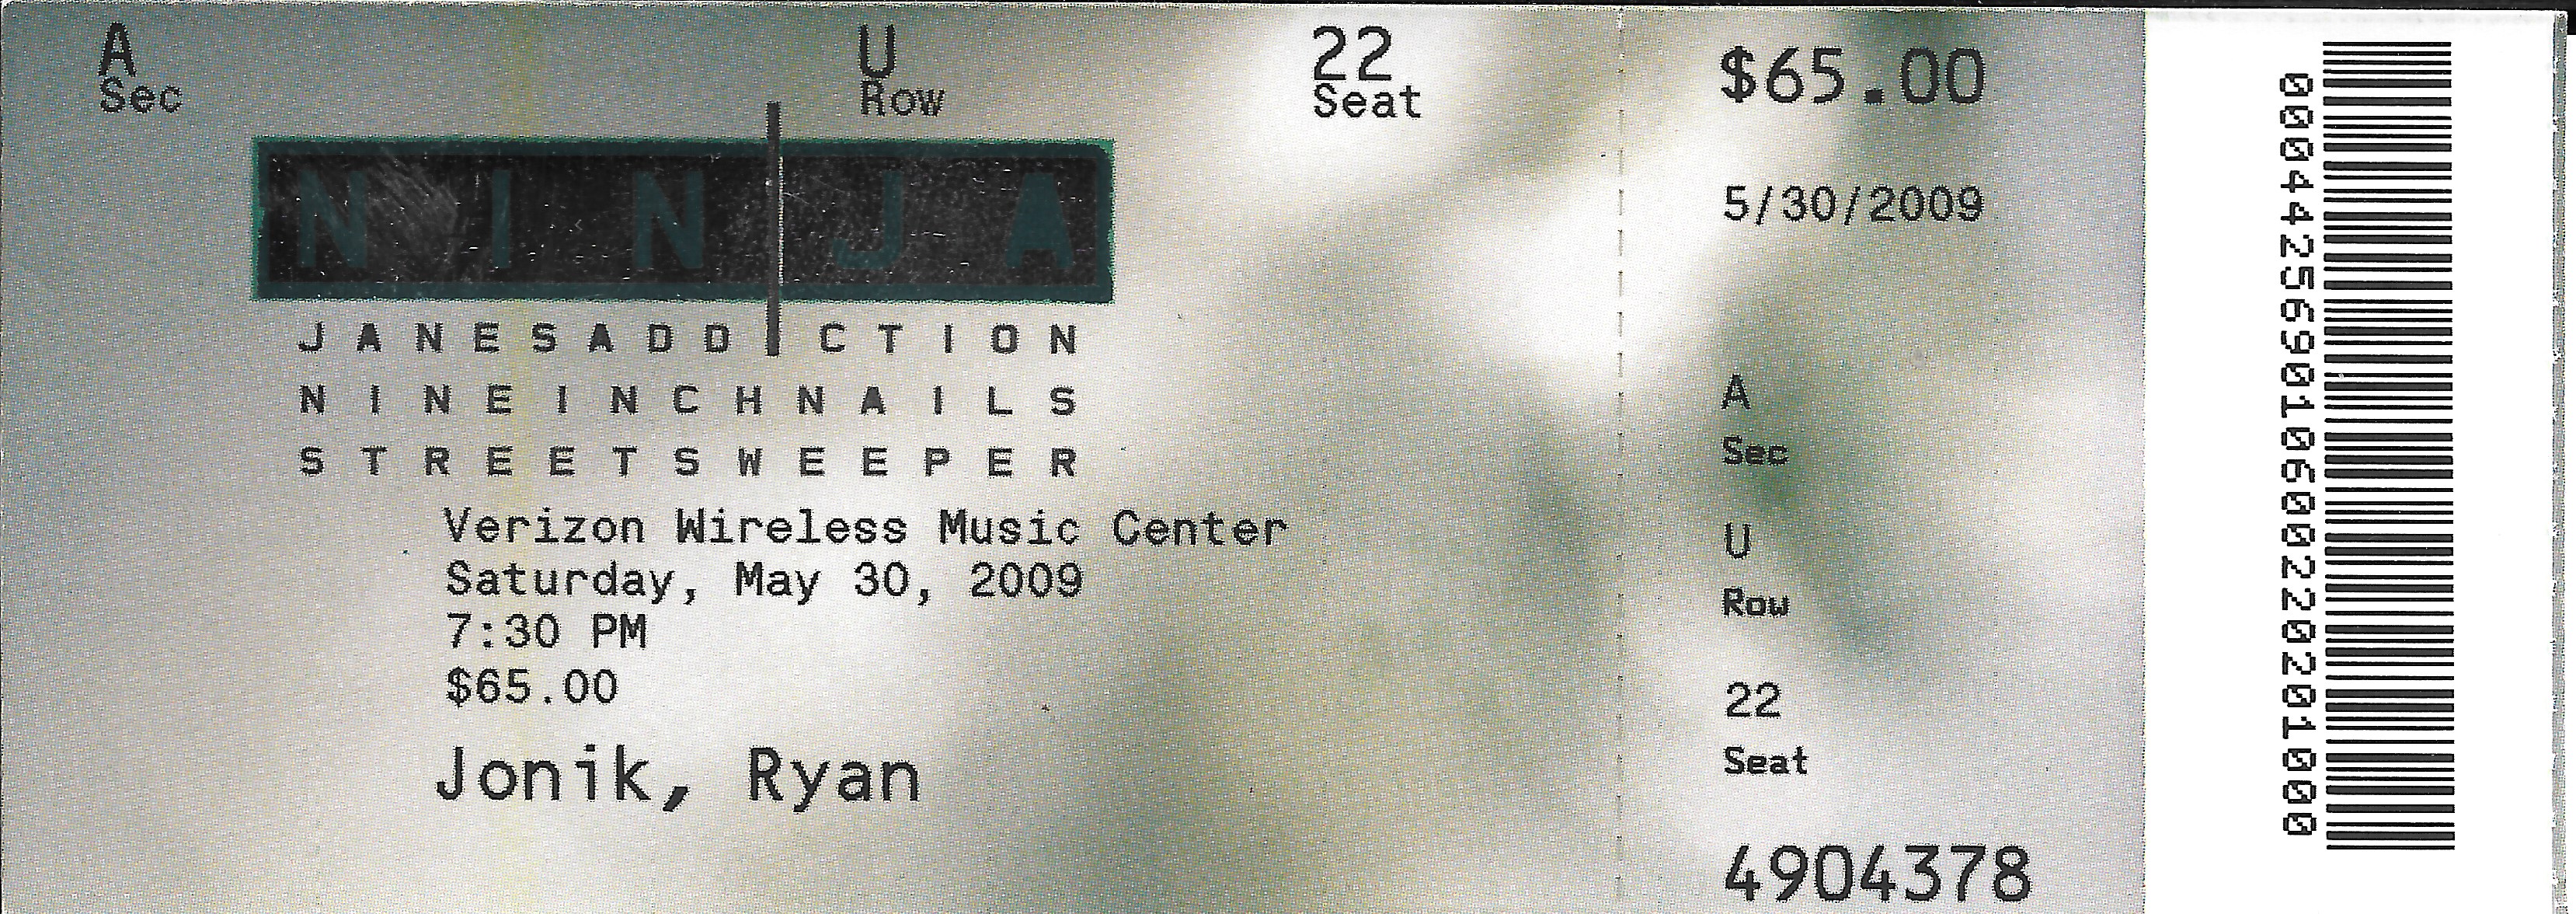 2009/05/30 Ticket